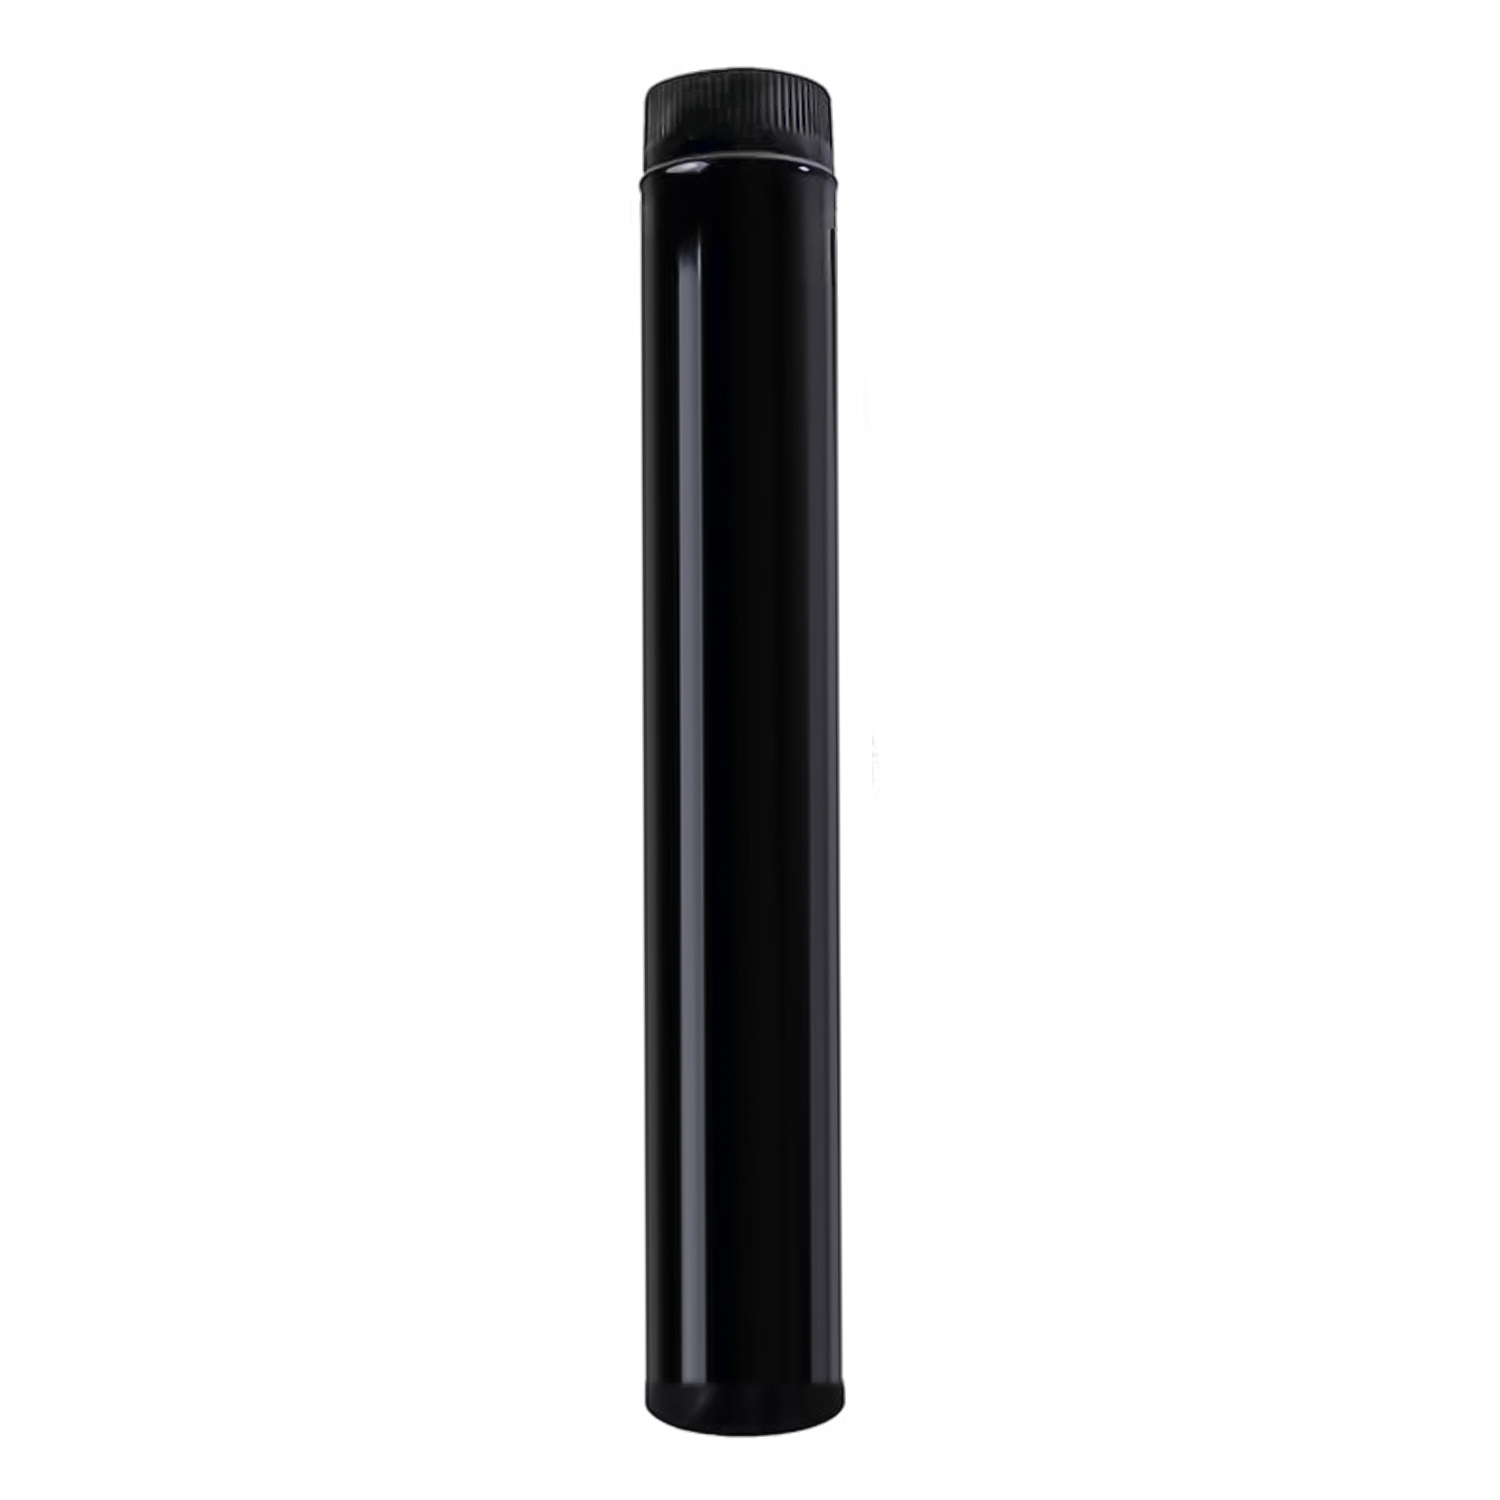 Wolfpack Tubo de Estufa Acero Vitrificado Negro Ø 100 mm. Ideal Estufas de Leña, Chimenea, Alta resi